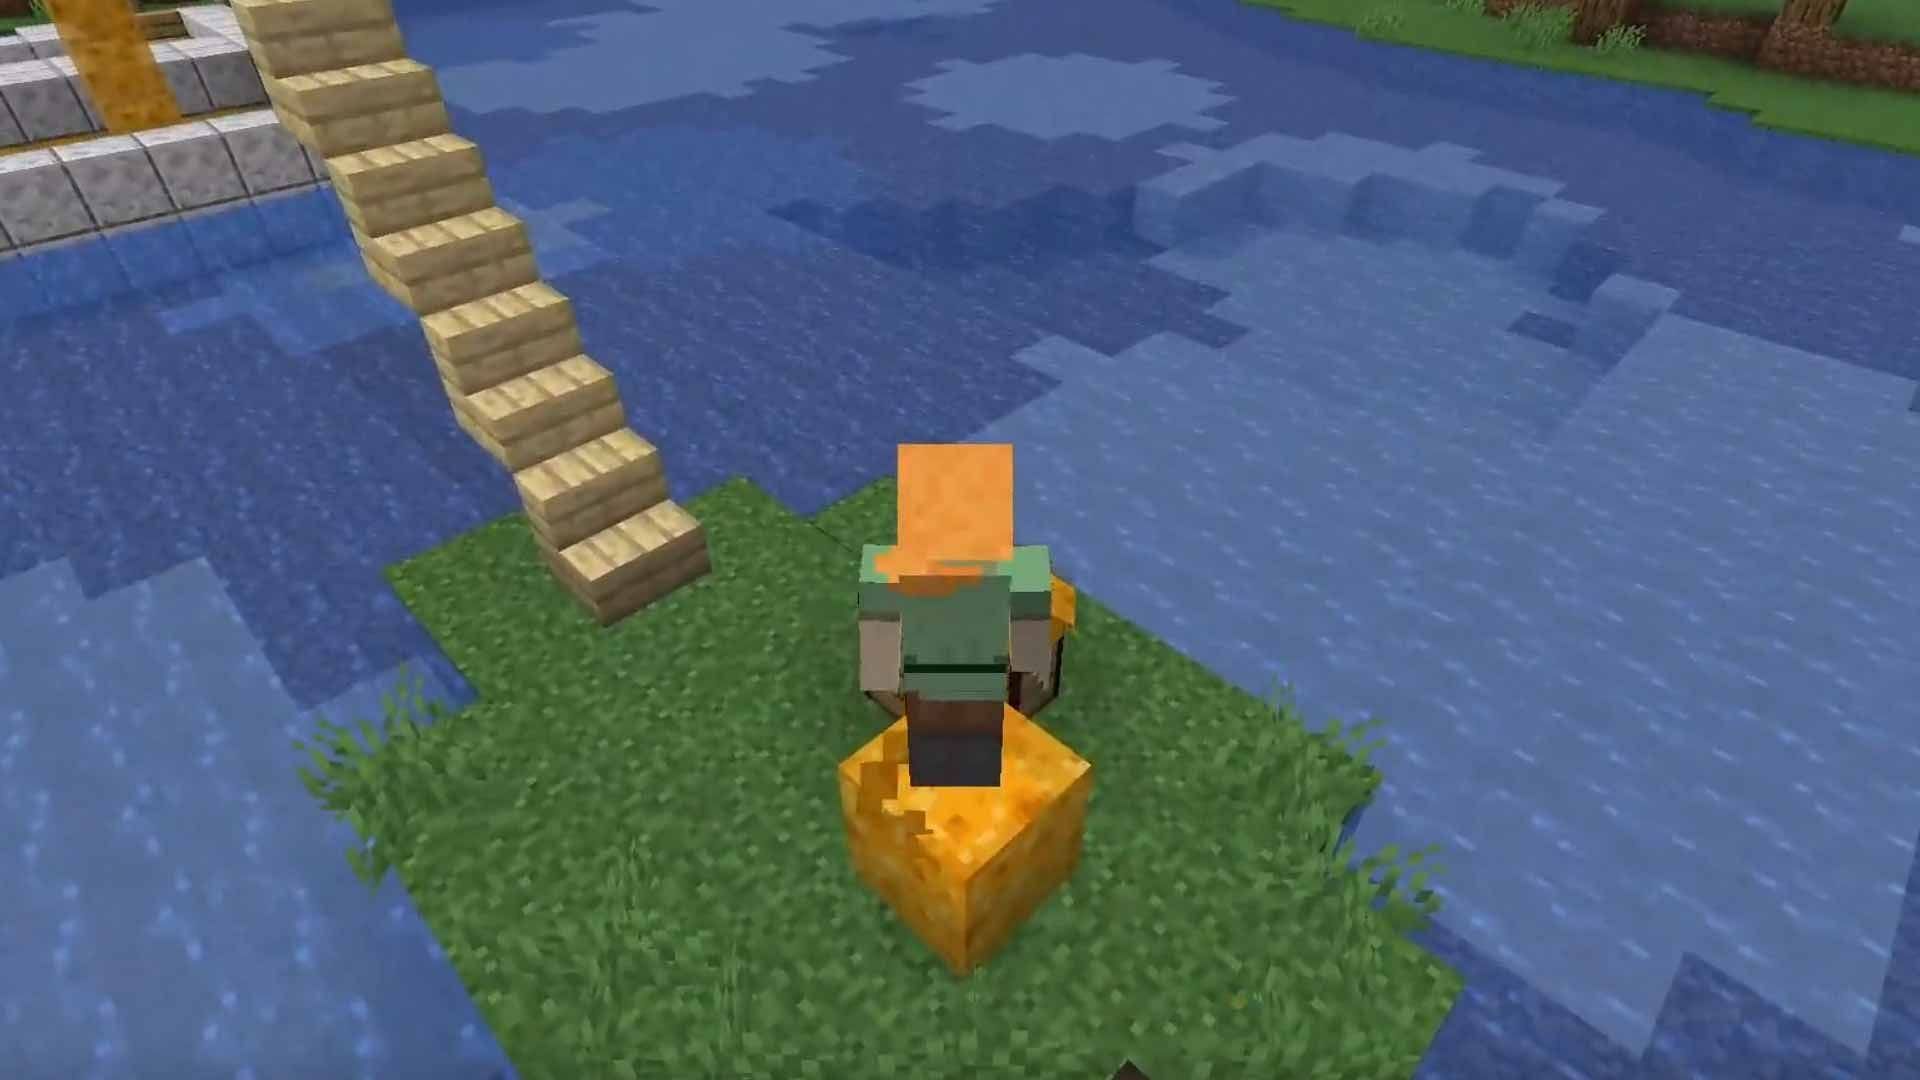 Alex standing on a honey block in Minecraft (Image via Mojang)